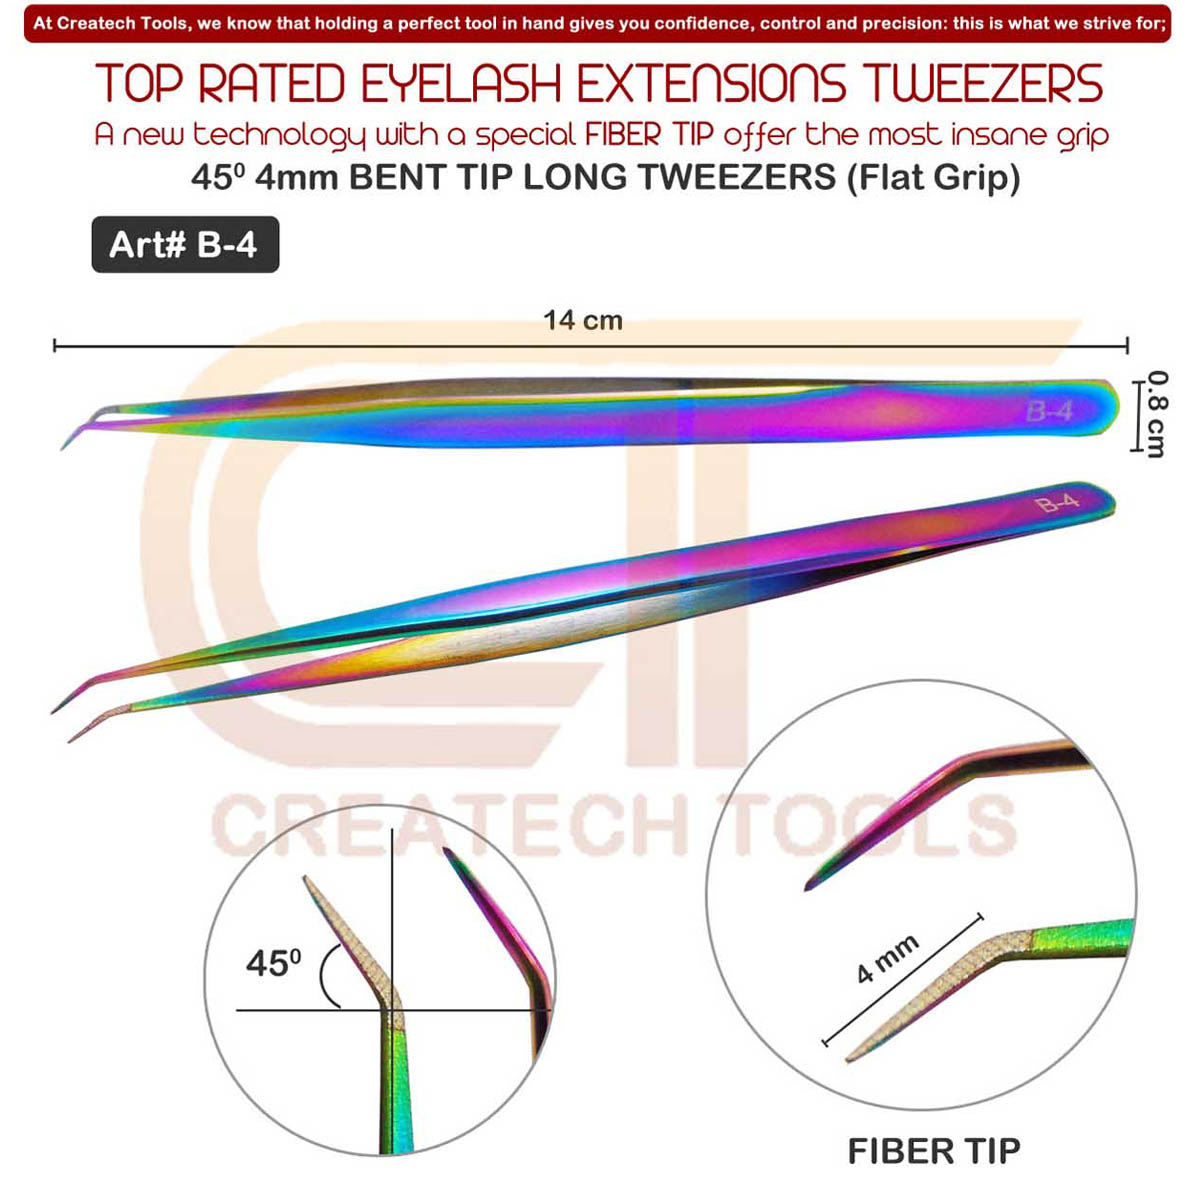 CT Createch Tools Fiber Tip Eyelash Lash Tweezers